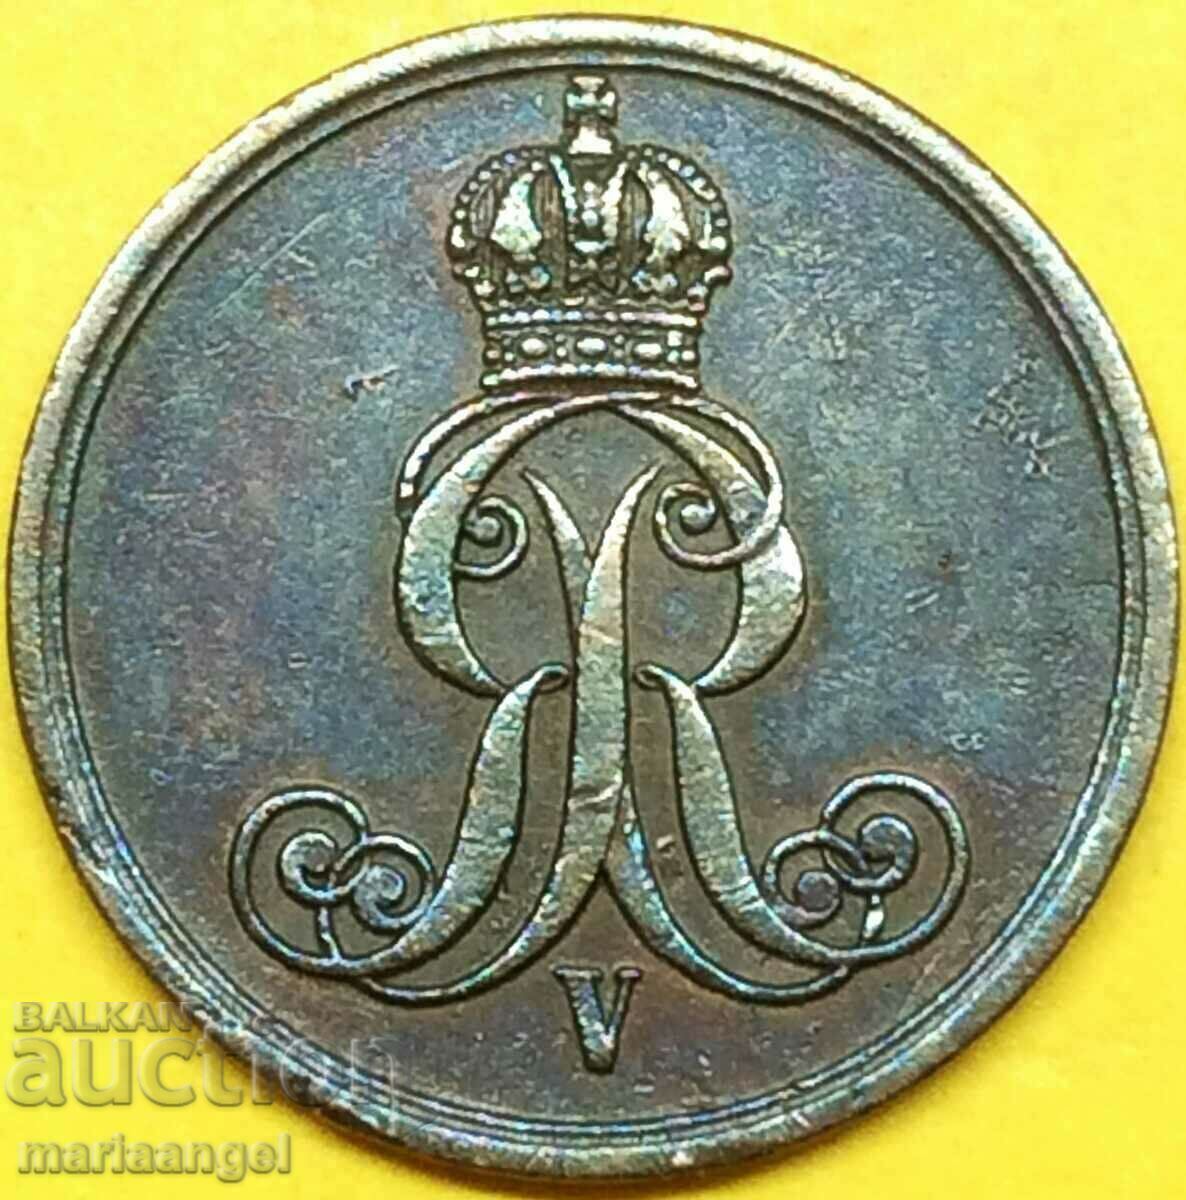 1 pfennig 1860 Germania Hanovra